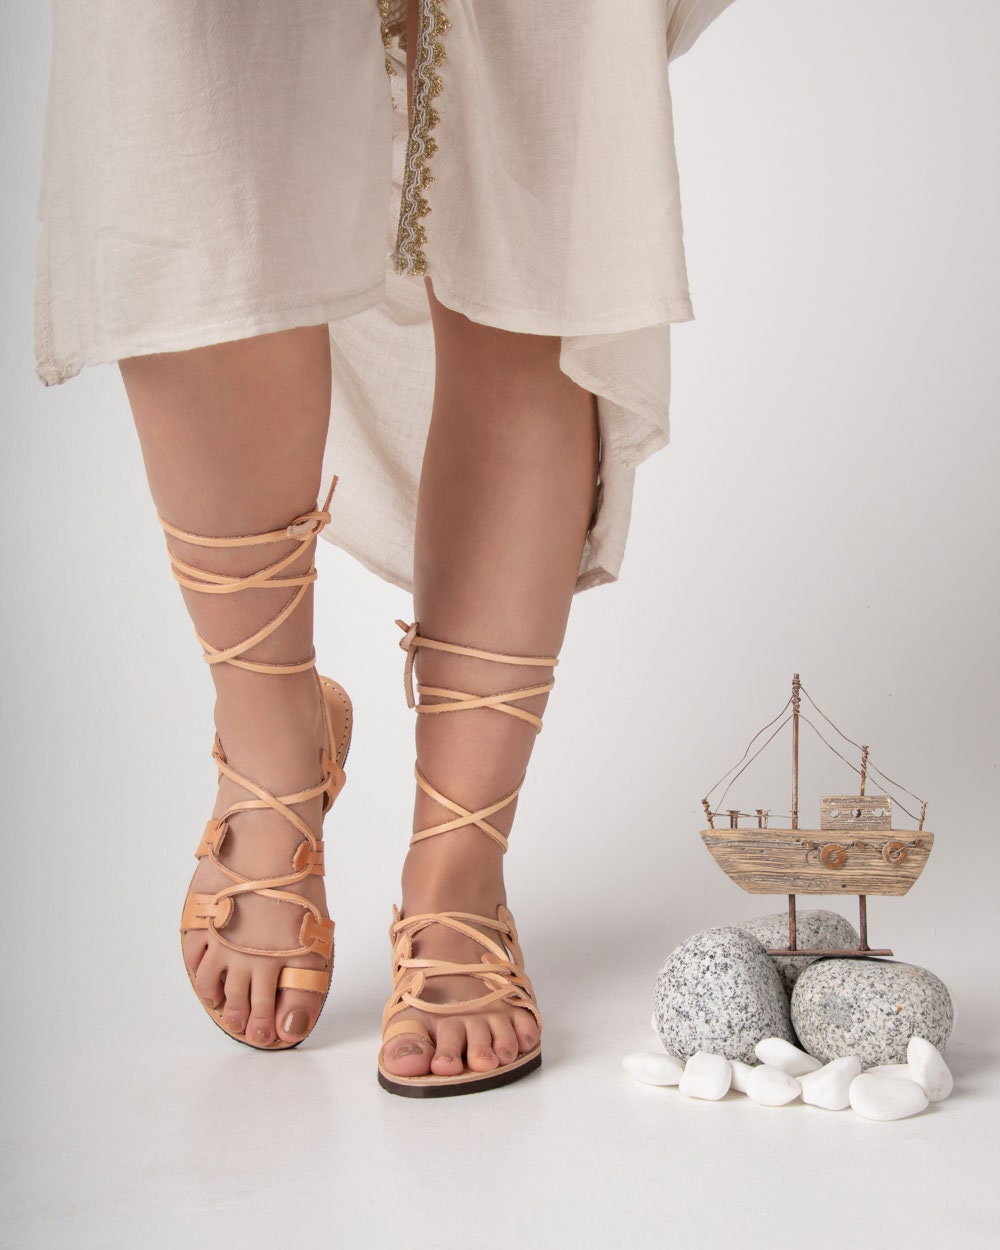 Leather sandals women, gladiator handmade leather summer sandals, sandales grecques, sandalias griegas, gladiator sandalen